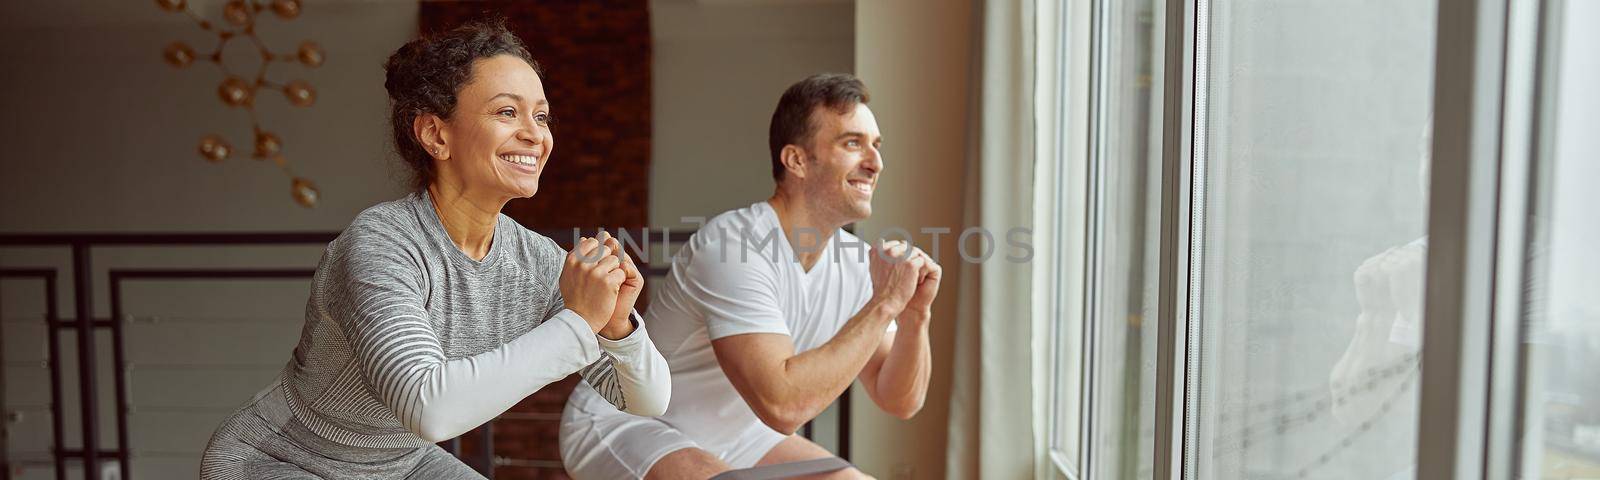 Joyful couple doing strength workout at home by Yaroslav_astakhov